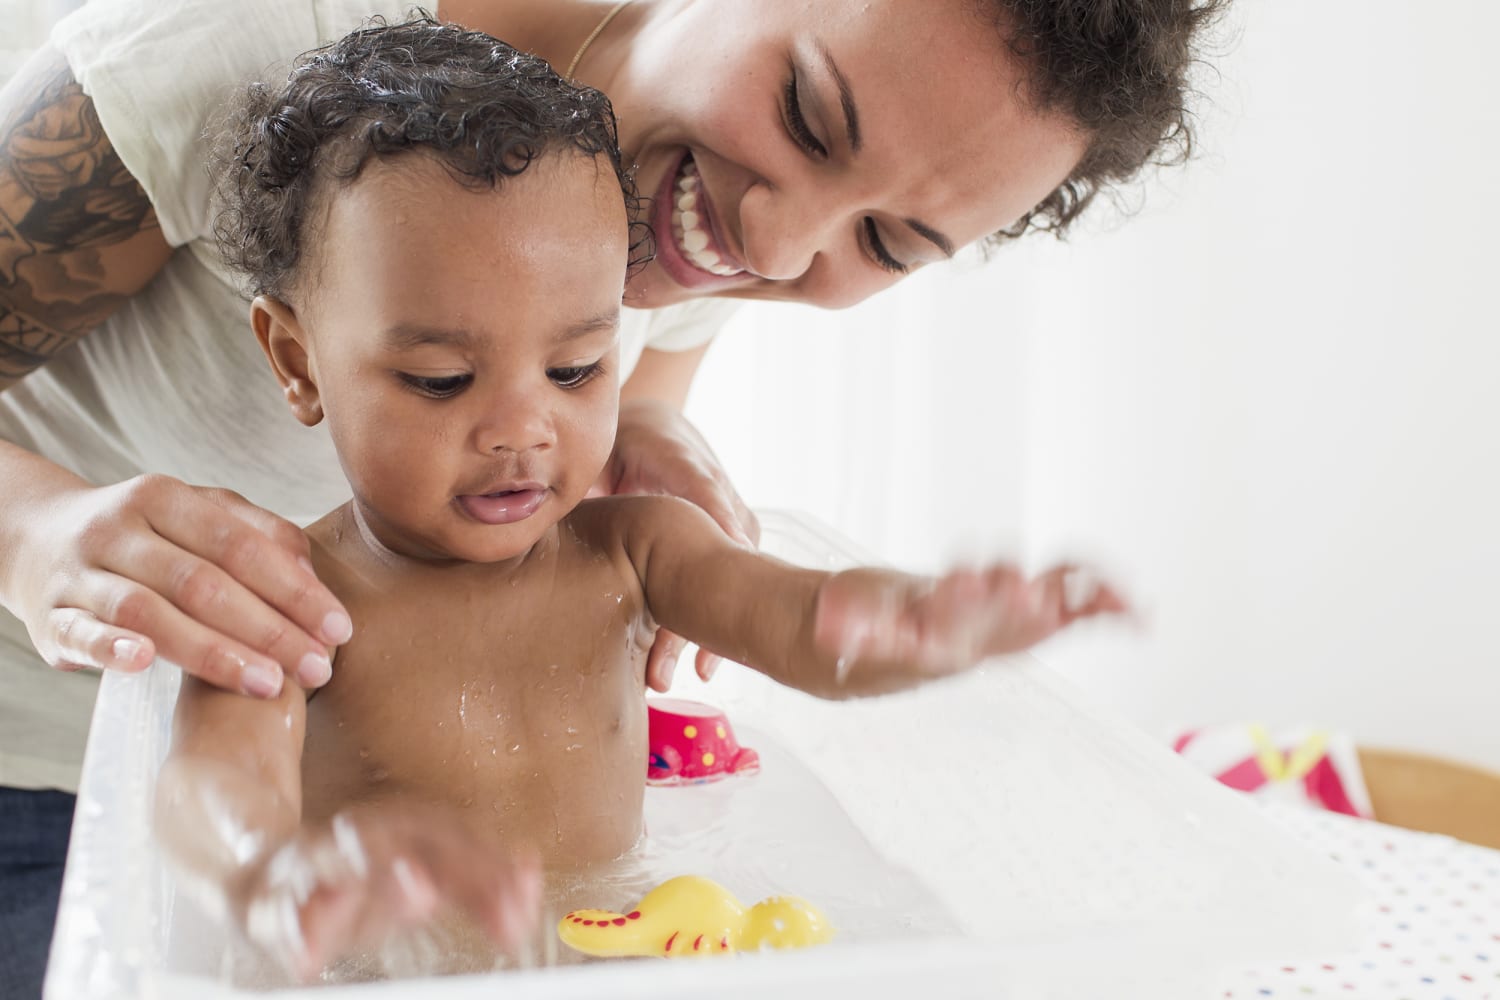 12 Days of Baby Stuff: Bath Time Essentials